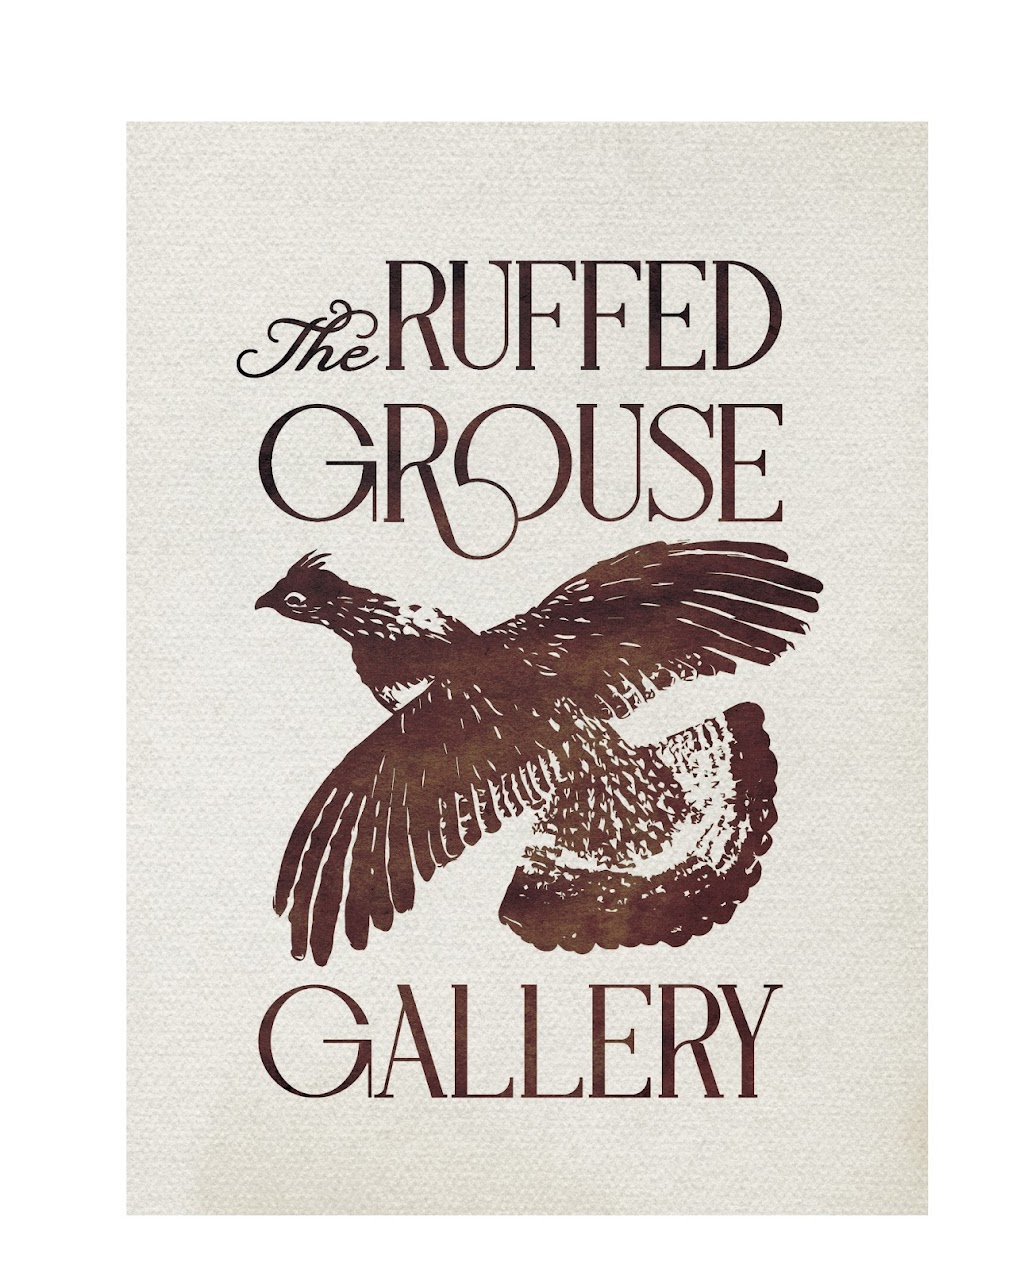 The Ruffed Grouse Gallery | 144 Main St, Narrowsburg, NY 12764 | Phone: (570) 815-0255